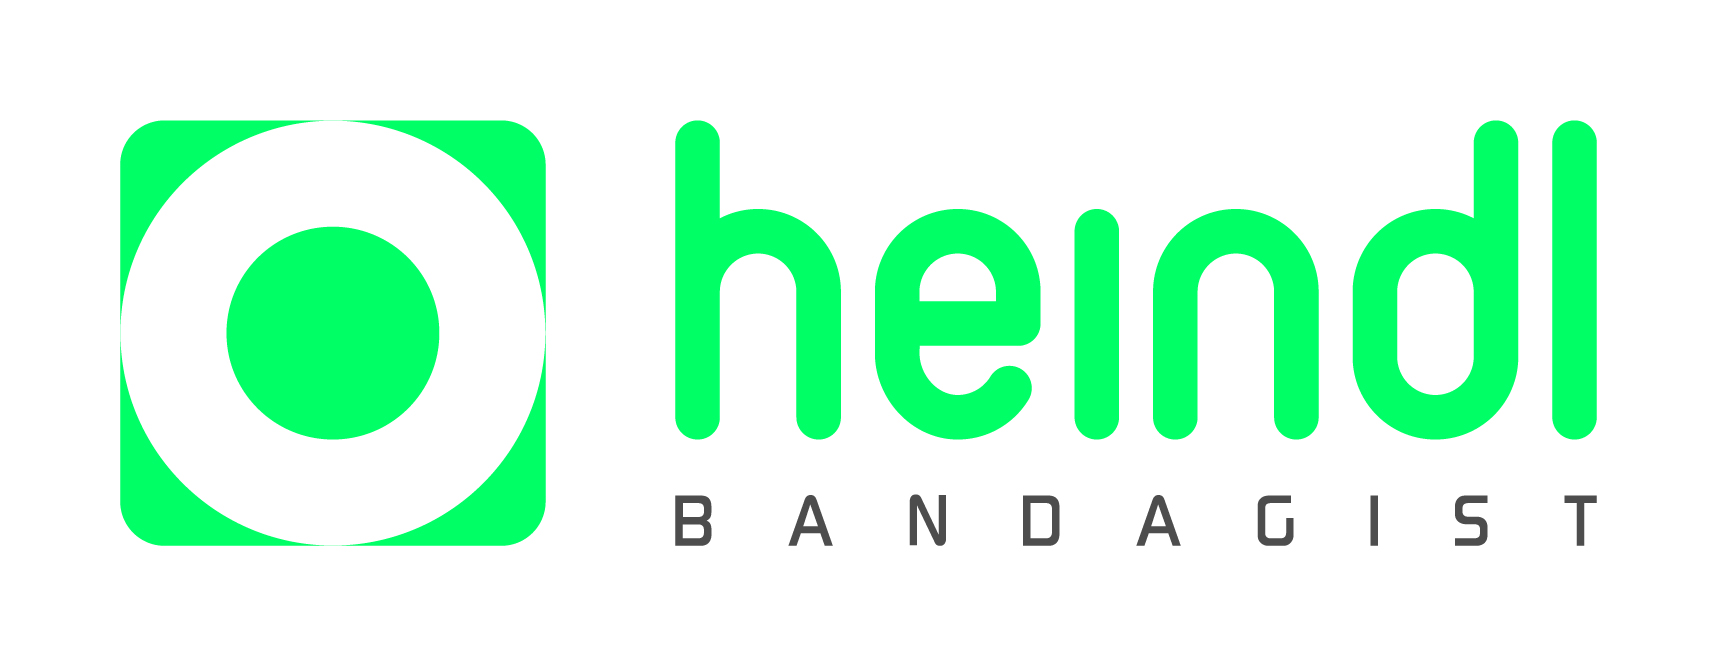 Heindl - Bandagist